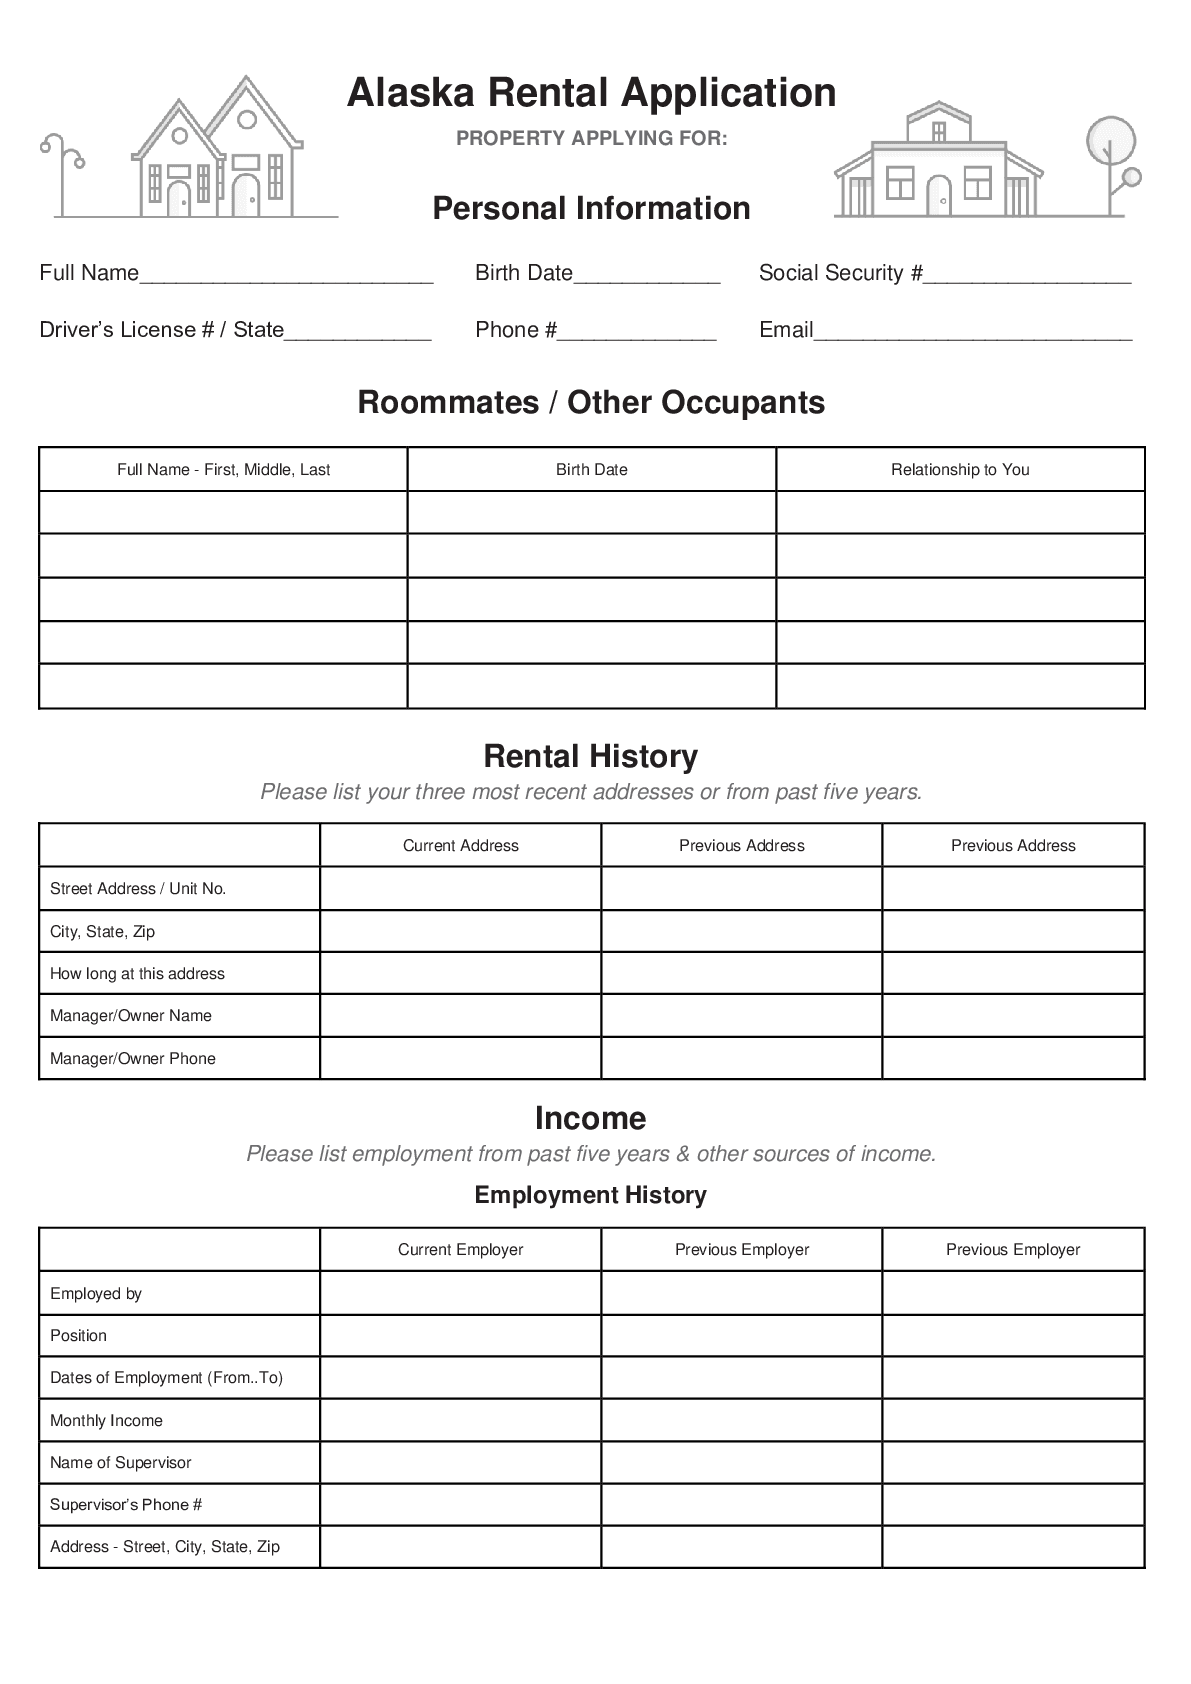 official-alaska-rental-application-form-2021-pdf-template